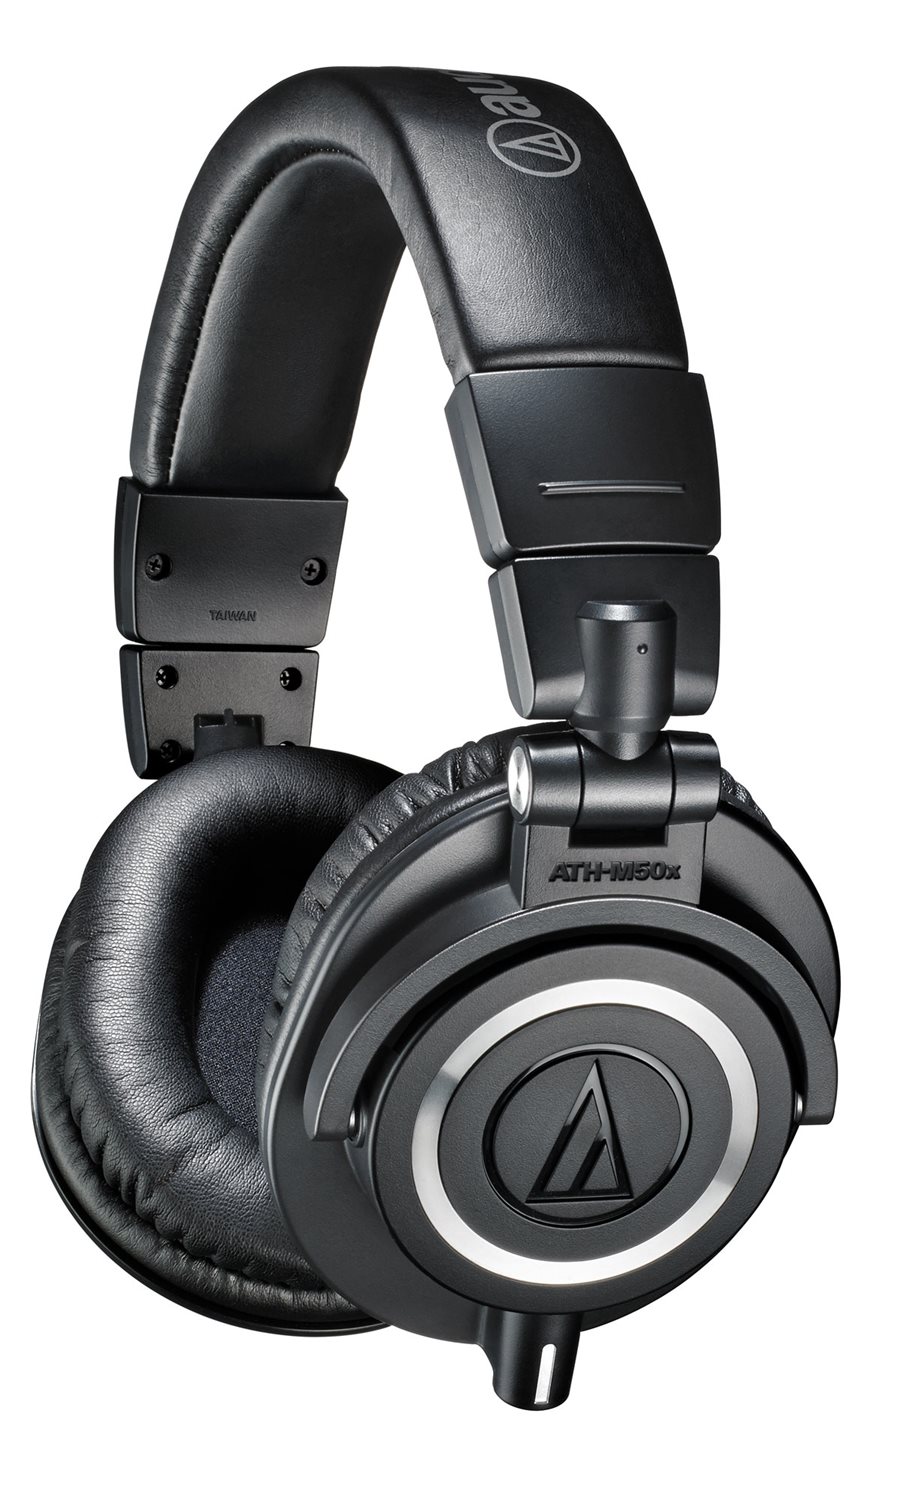 Audio-Technica ATH-M50x Professional Studio Monitor Headphones Detachable Cable 1018053 Black Friday Digital DJ Gear